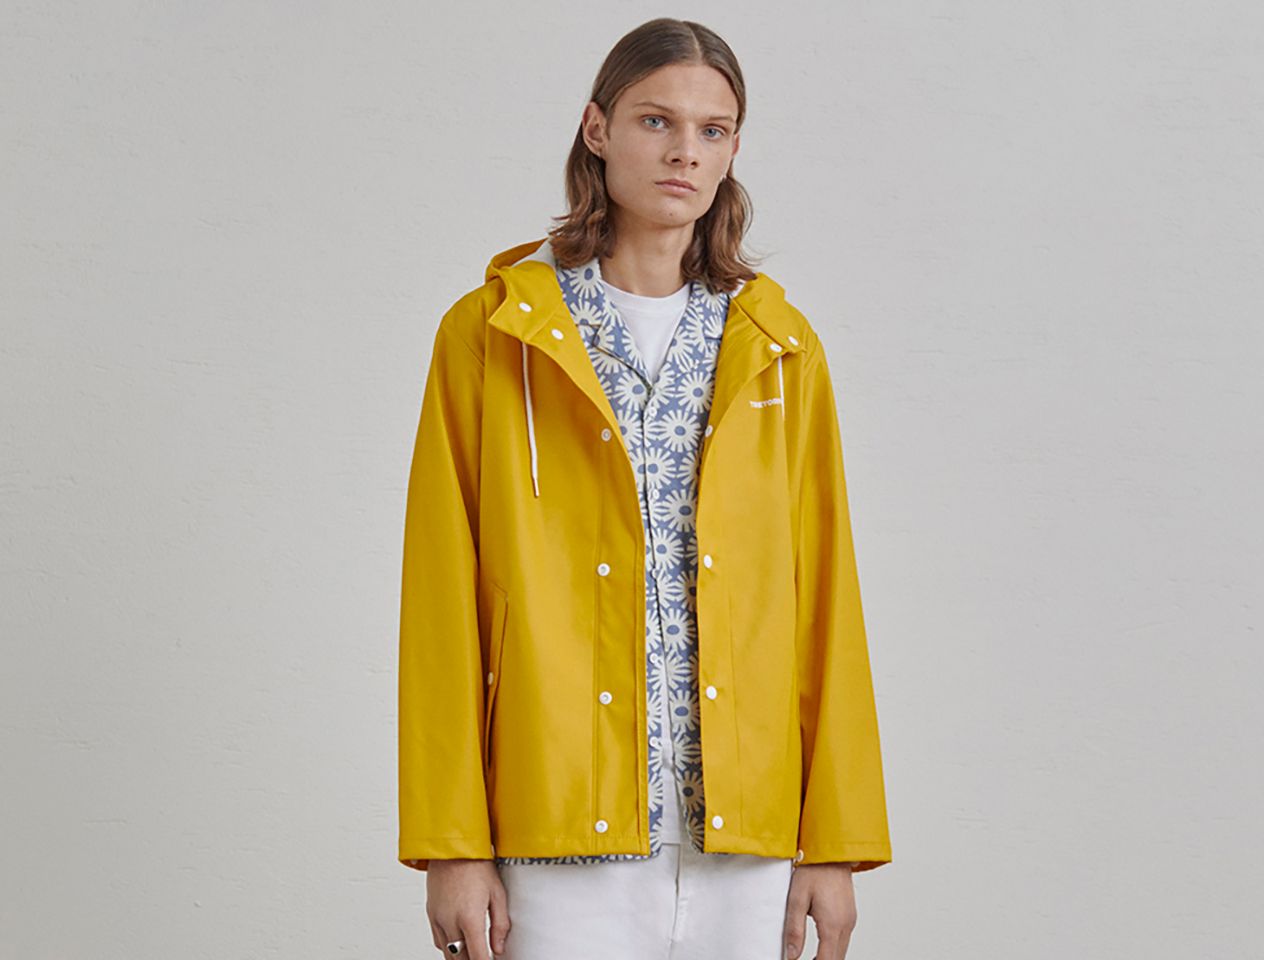 Model in Tretorn yellow jacket